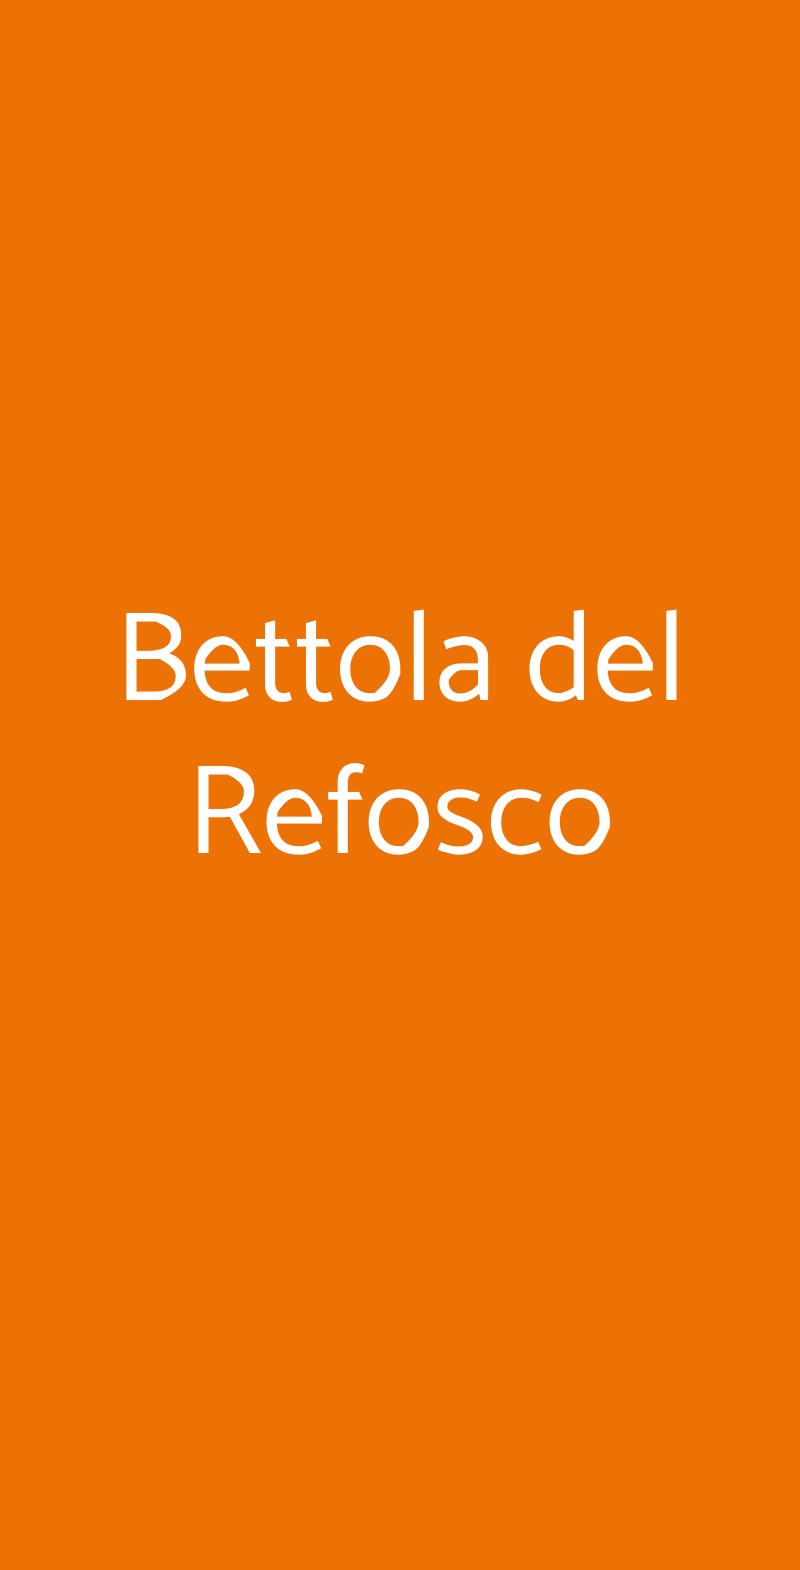 Bettola del Refosco Montegrotto Terme menù 1 pagina